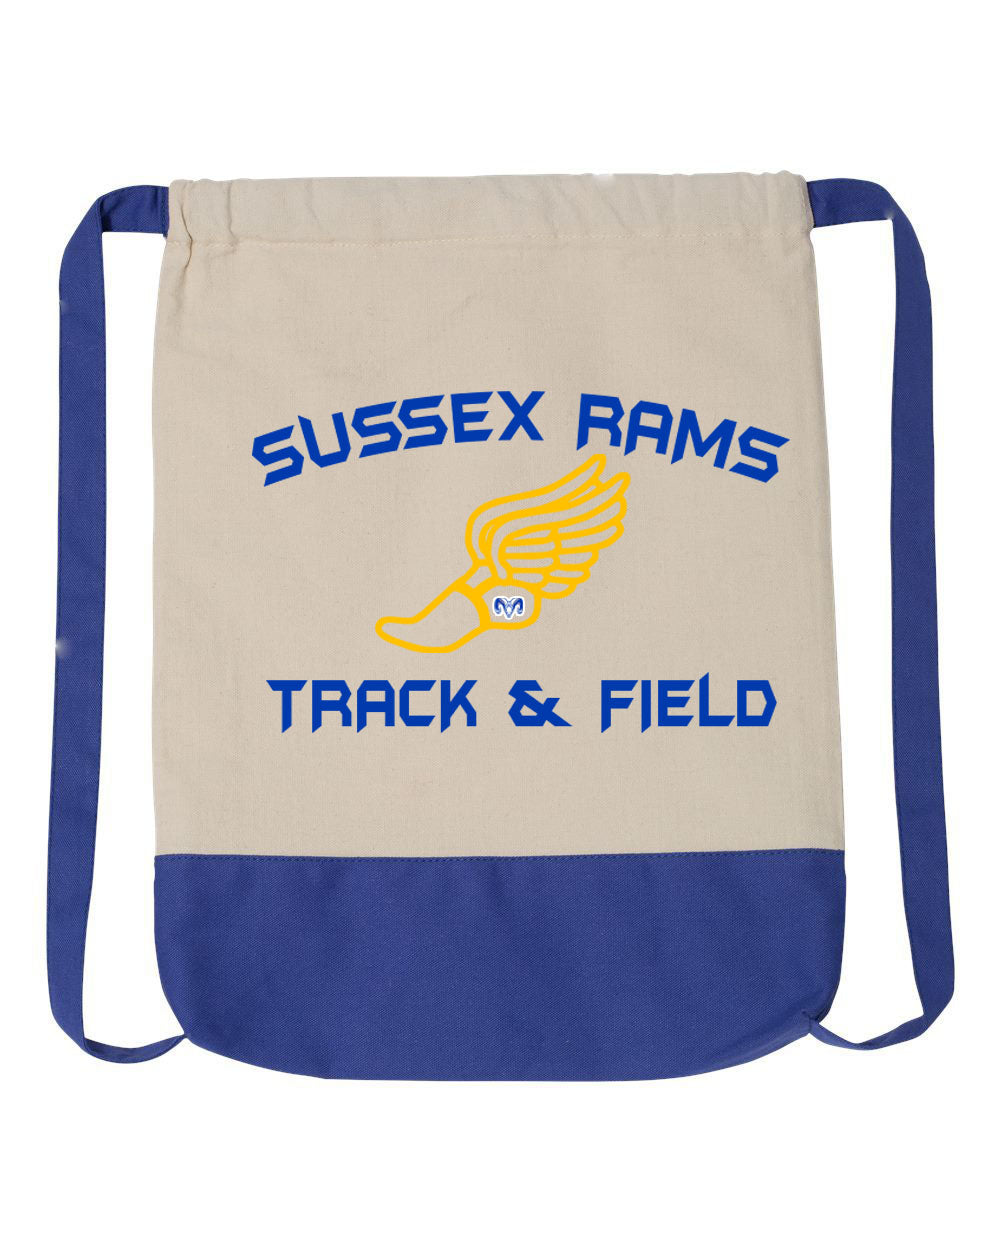 Sussex Rams Track Drawstring Bag Design 2